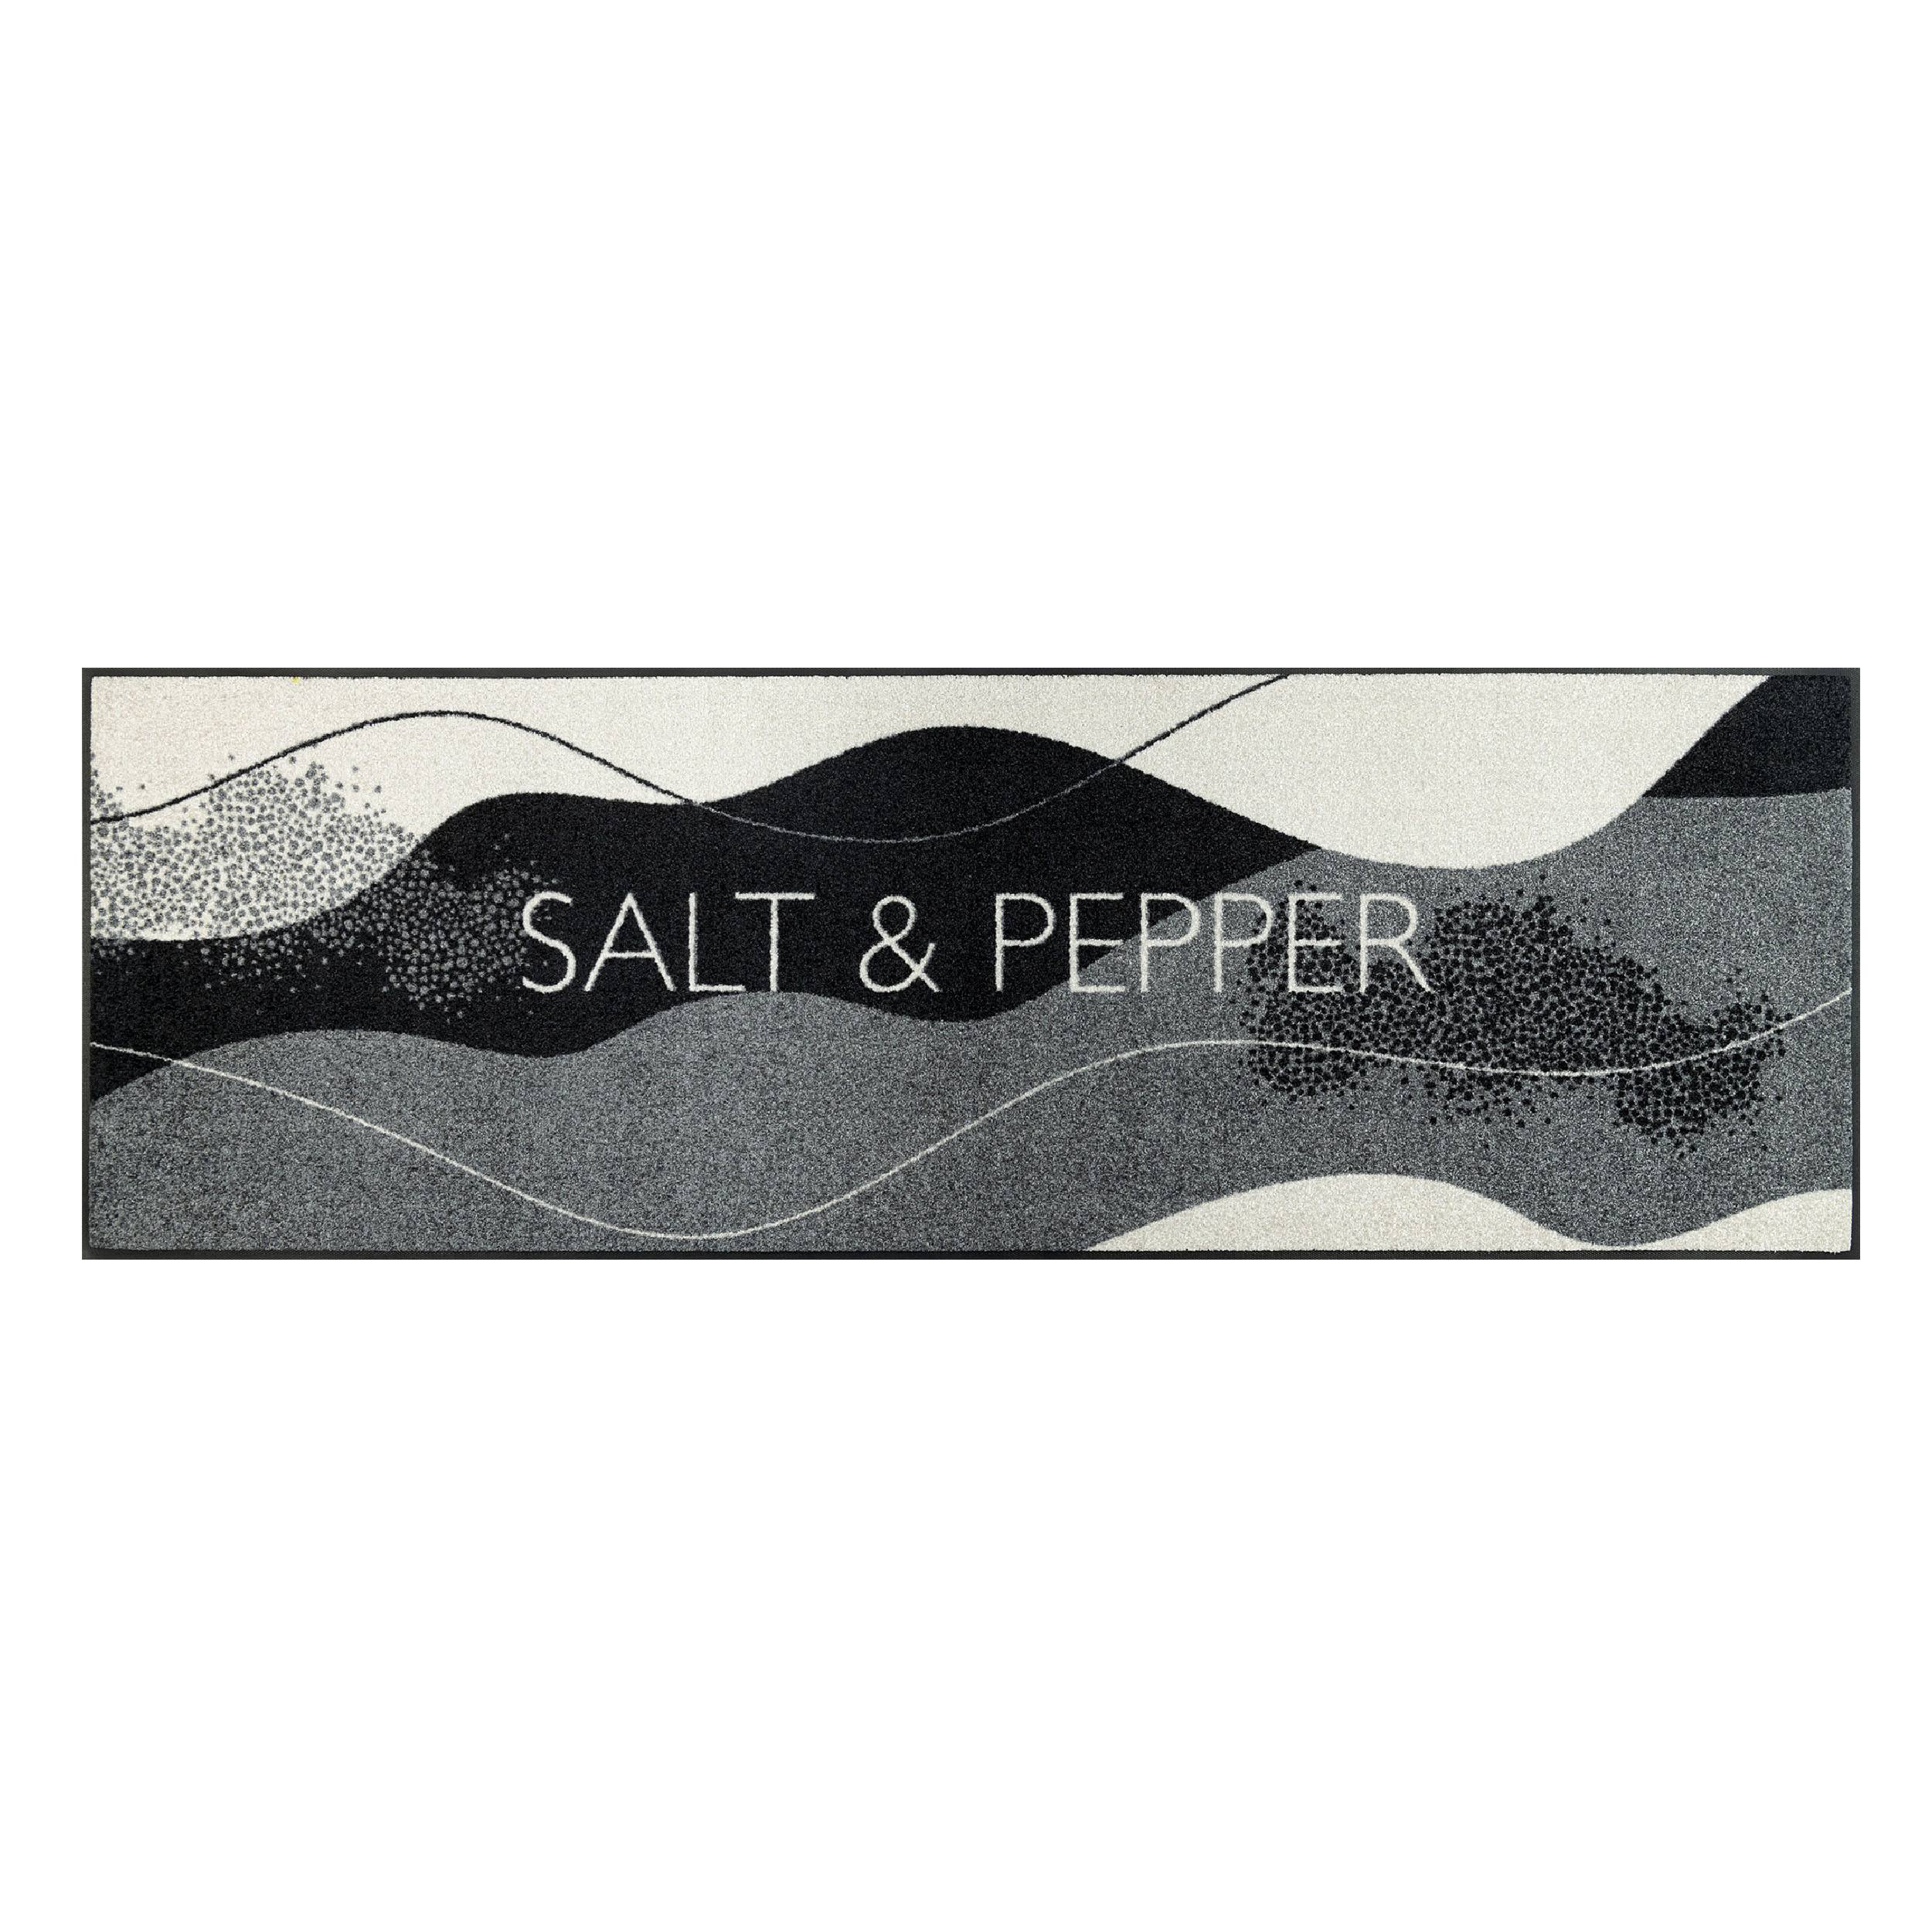 Salt & Pepper wash + dry Sauberlaufmatte